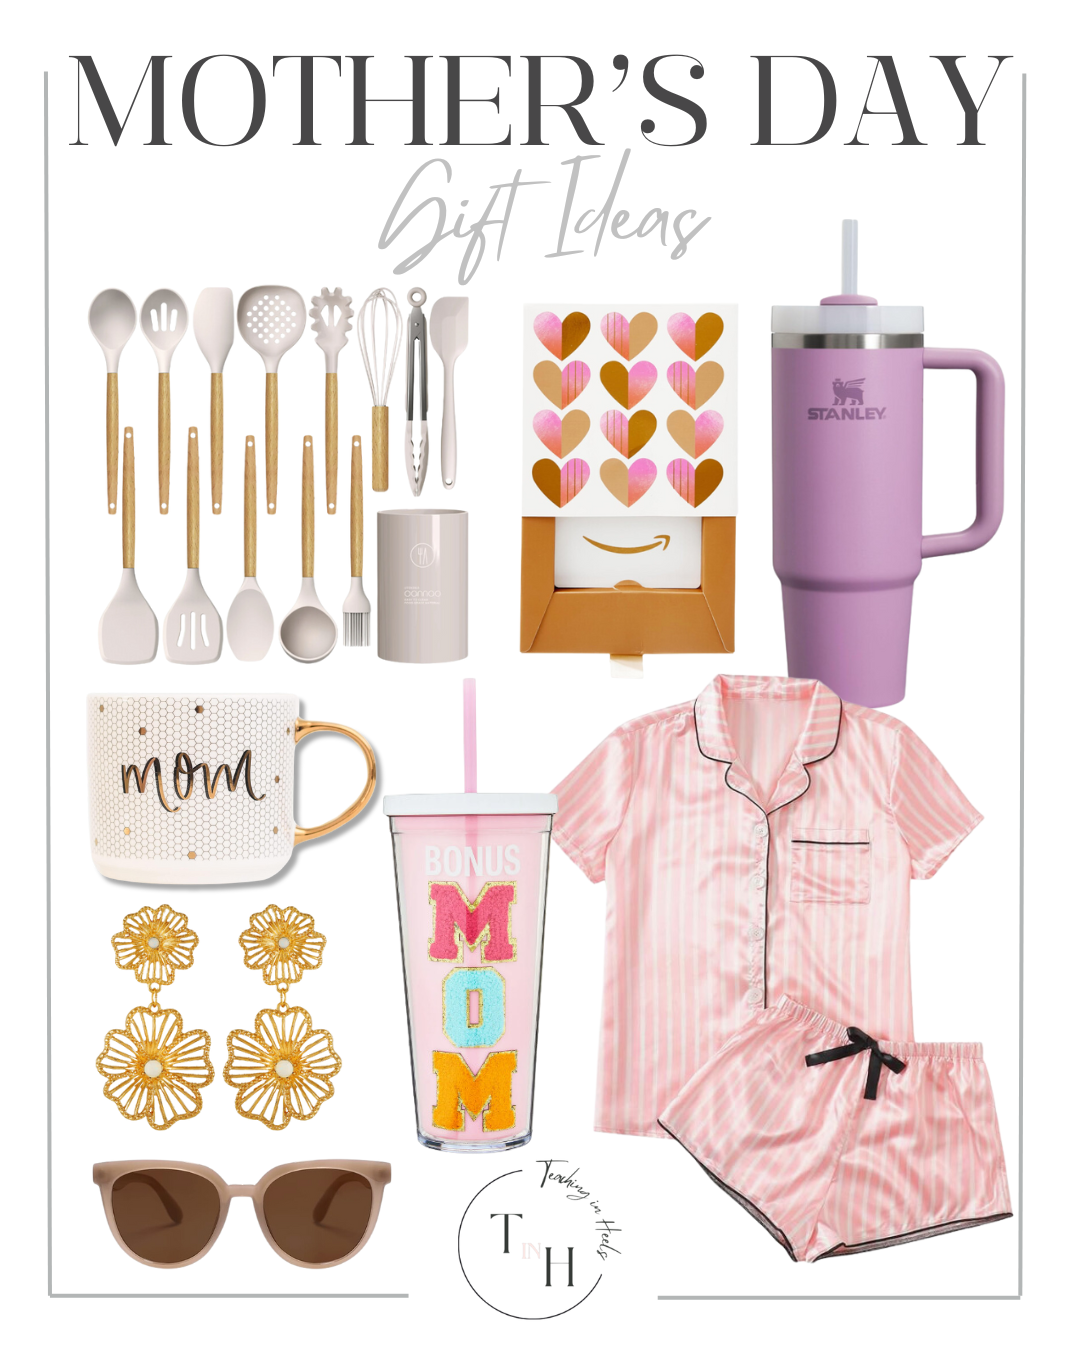 10 Heartwarming Mother's Day Gift Ideas to Show Your Love

mother's day, mother's gifts, mom gifts, gift guide, seasonal, seasonal gifts, pajama set, mug, sunglasses